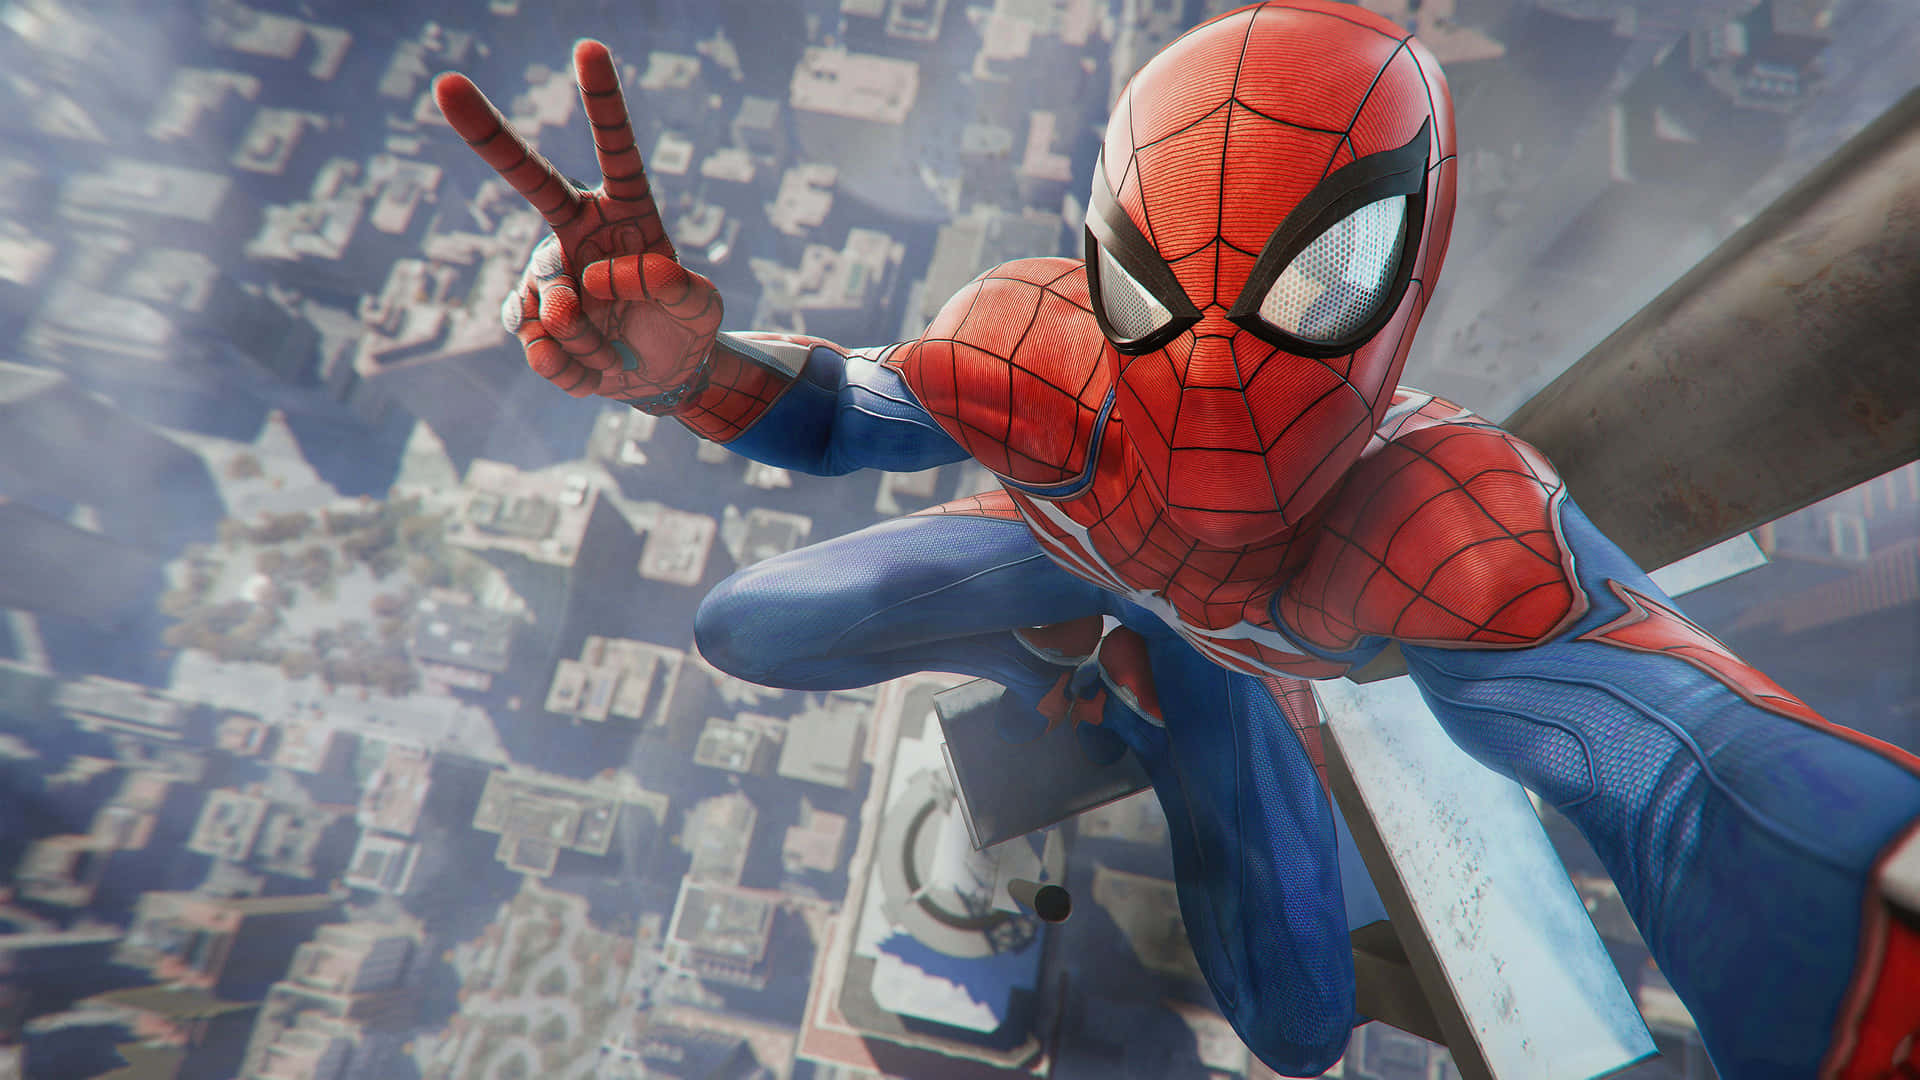 "Marvel's Spider-Man for PS4 in stunning 4K resolution" Wallpaper